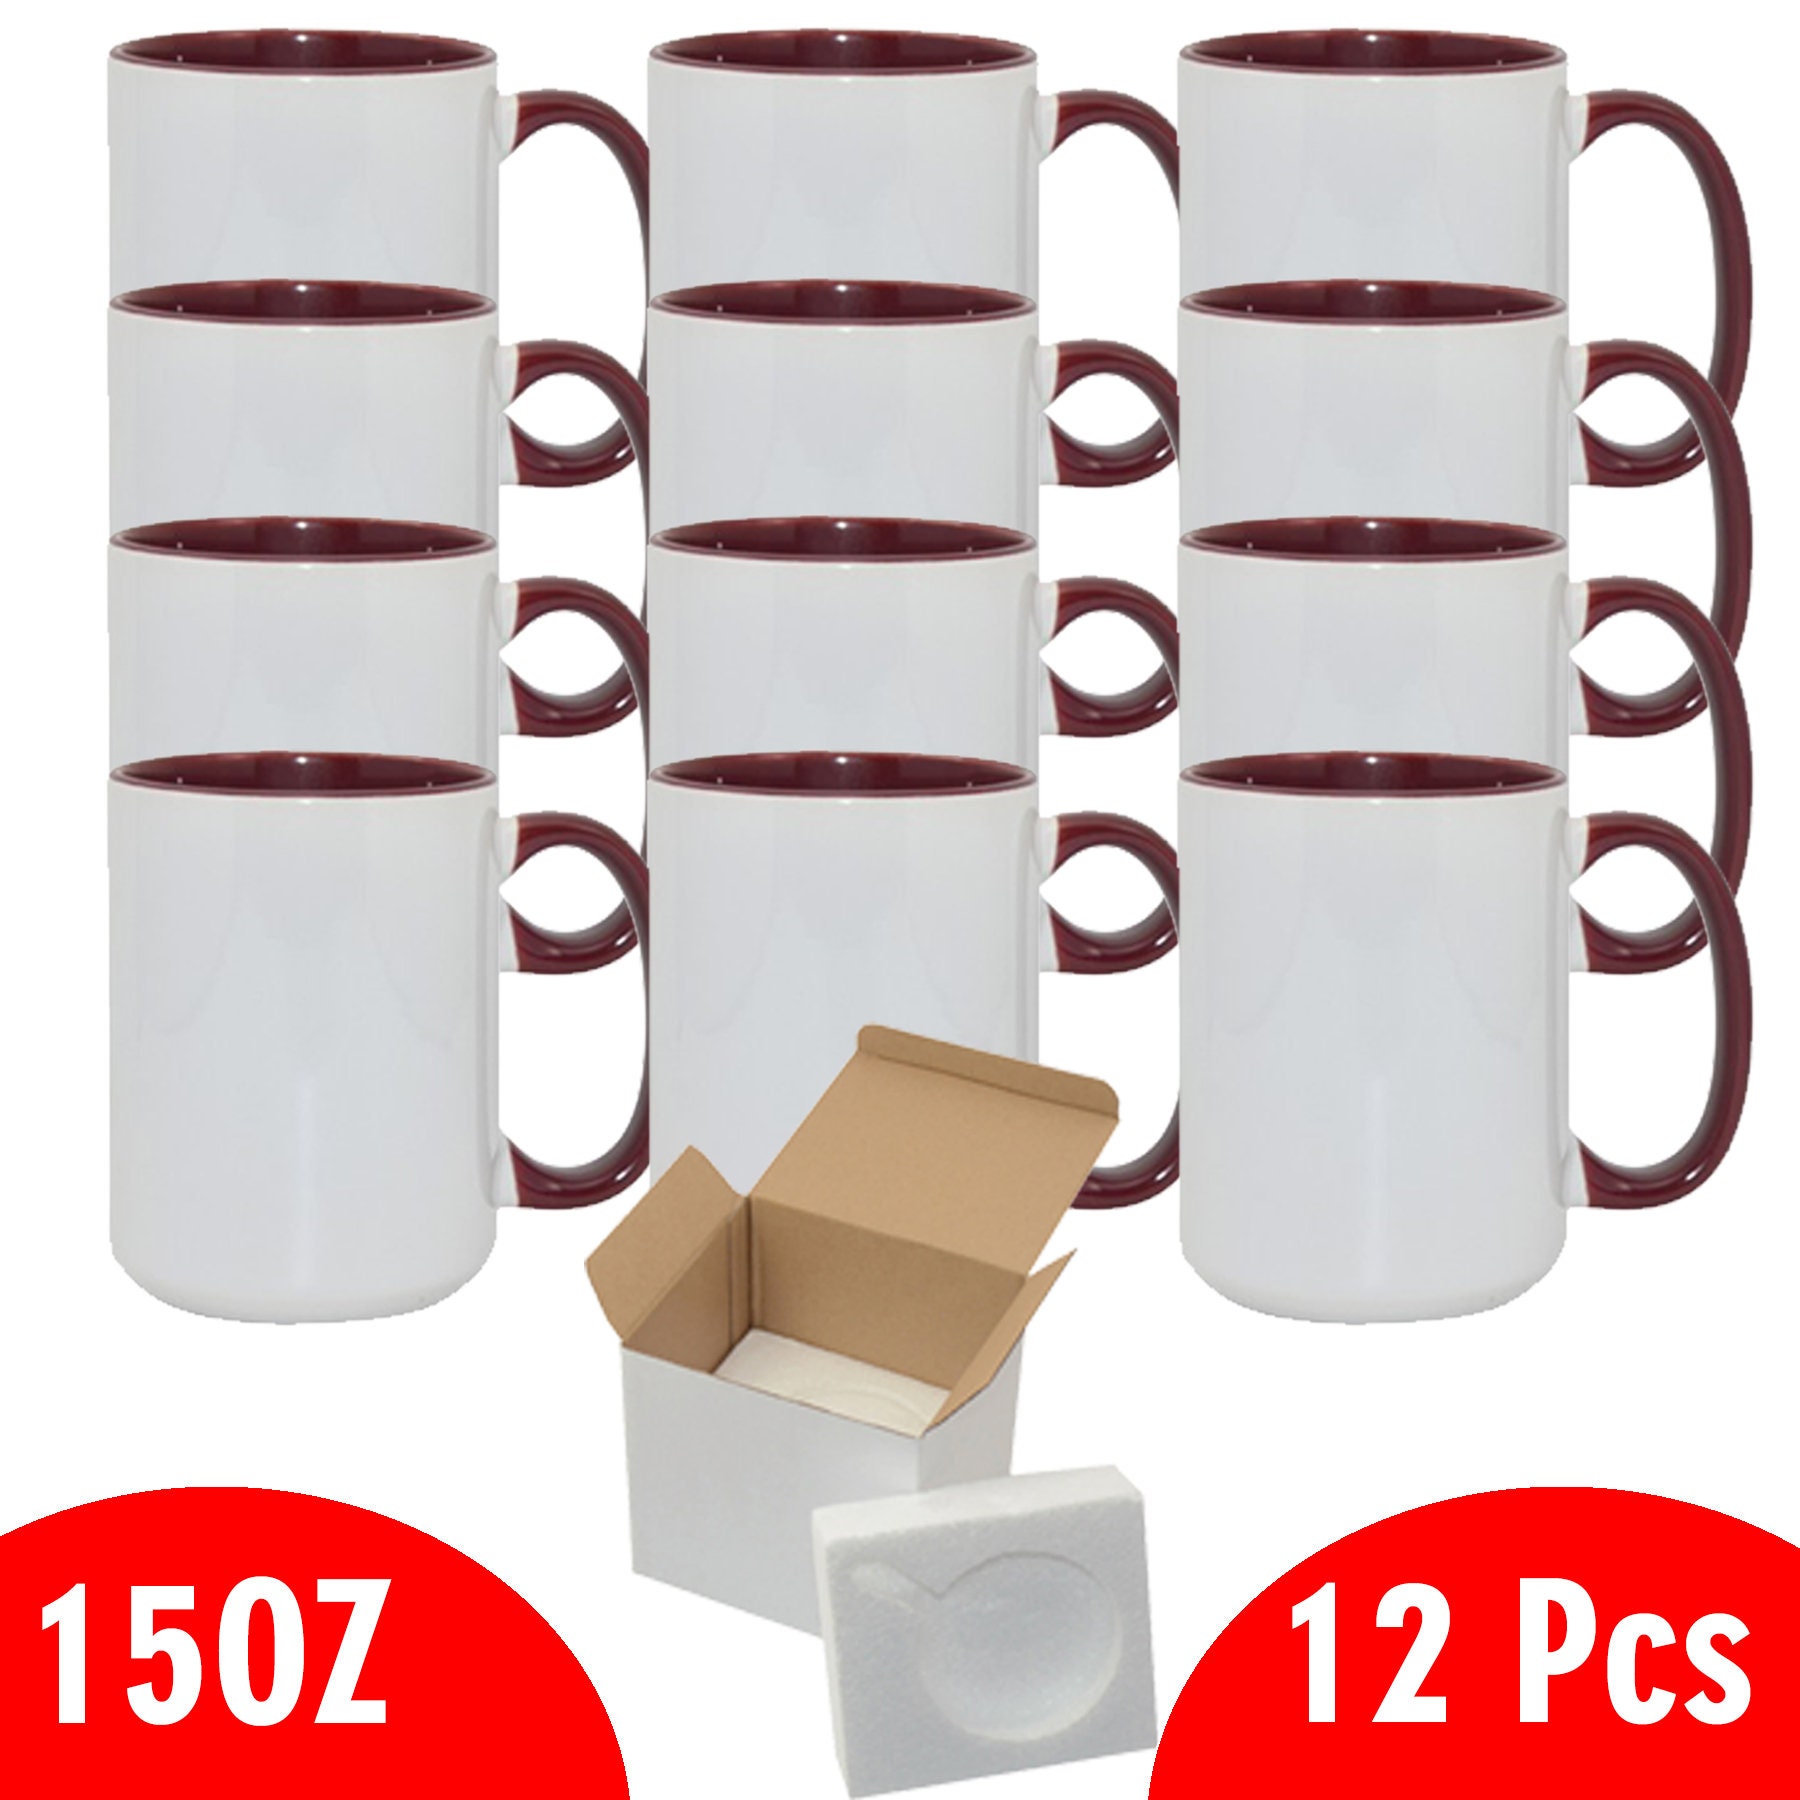 Shop Now for Bulk Sublimation Mugs - 12 Pack of 15oz Red Inner